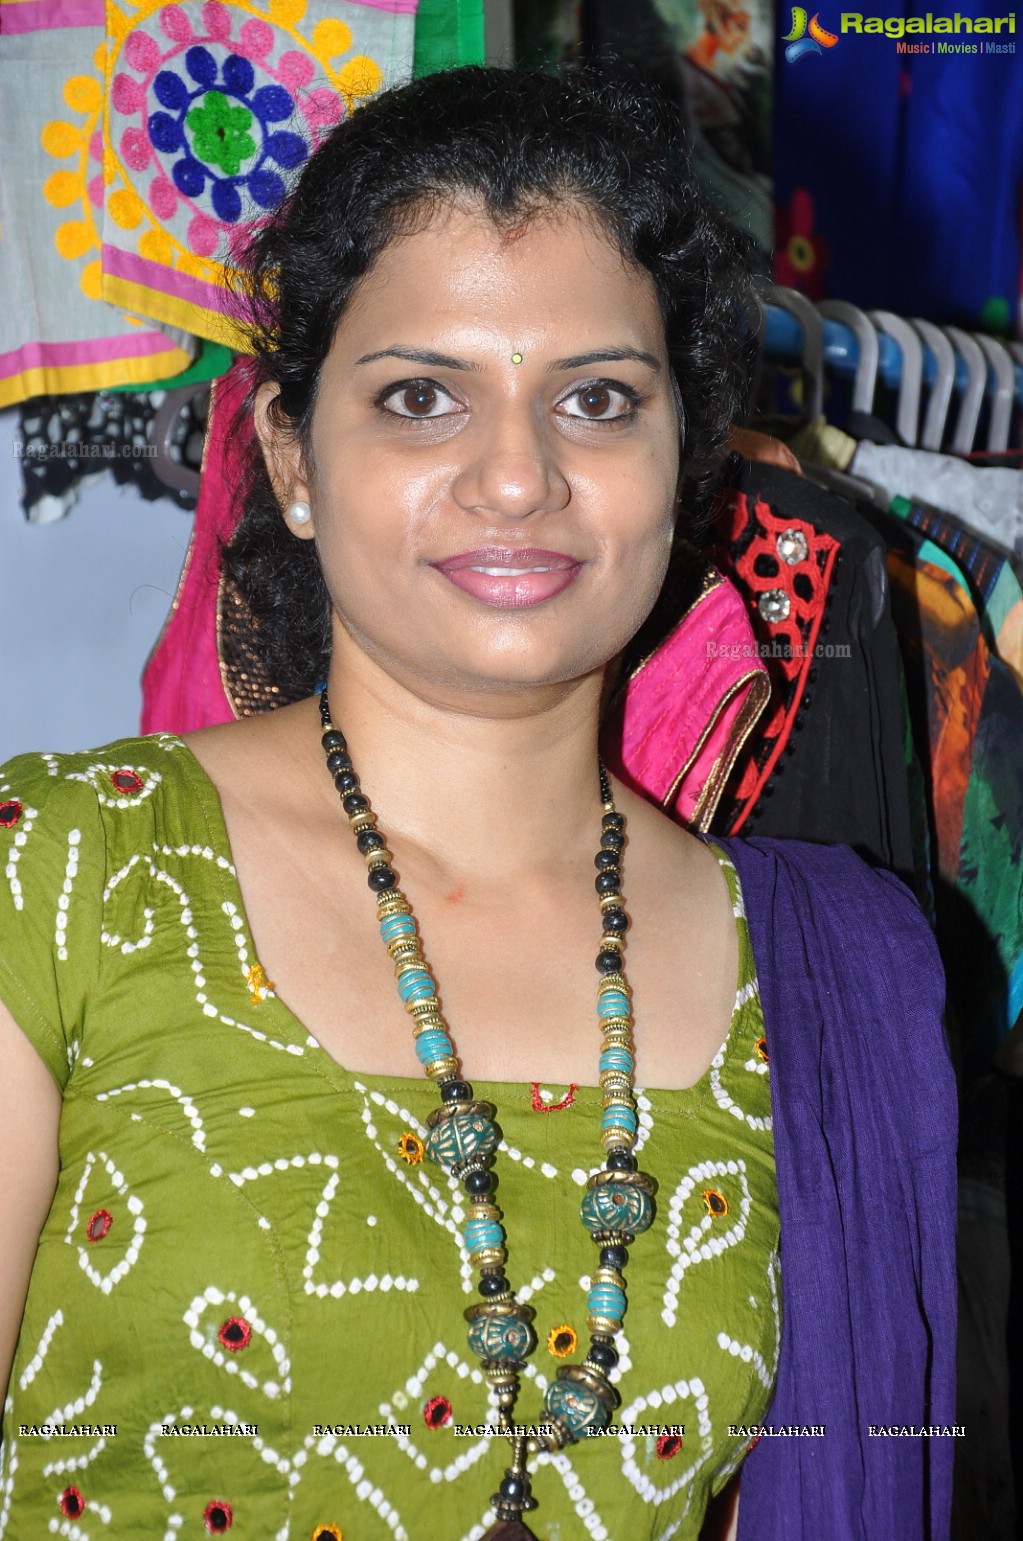 Parinaya Wedding Fair (September 2012), Hyderabad